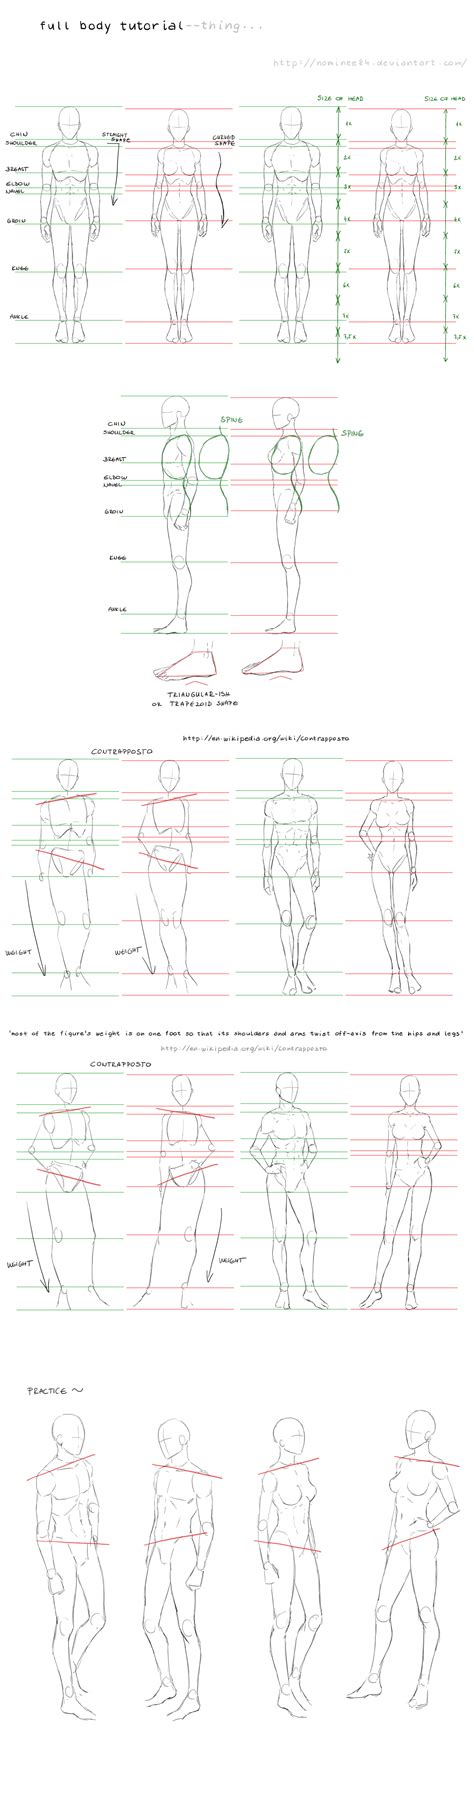 Full Body Tutorial By Nominee84 On Deviantart Body Tutorial Anatomy Drawing Figure Sketching